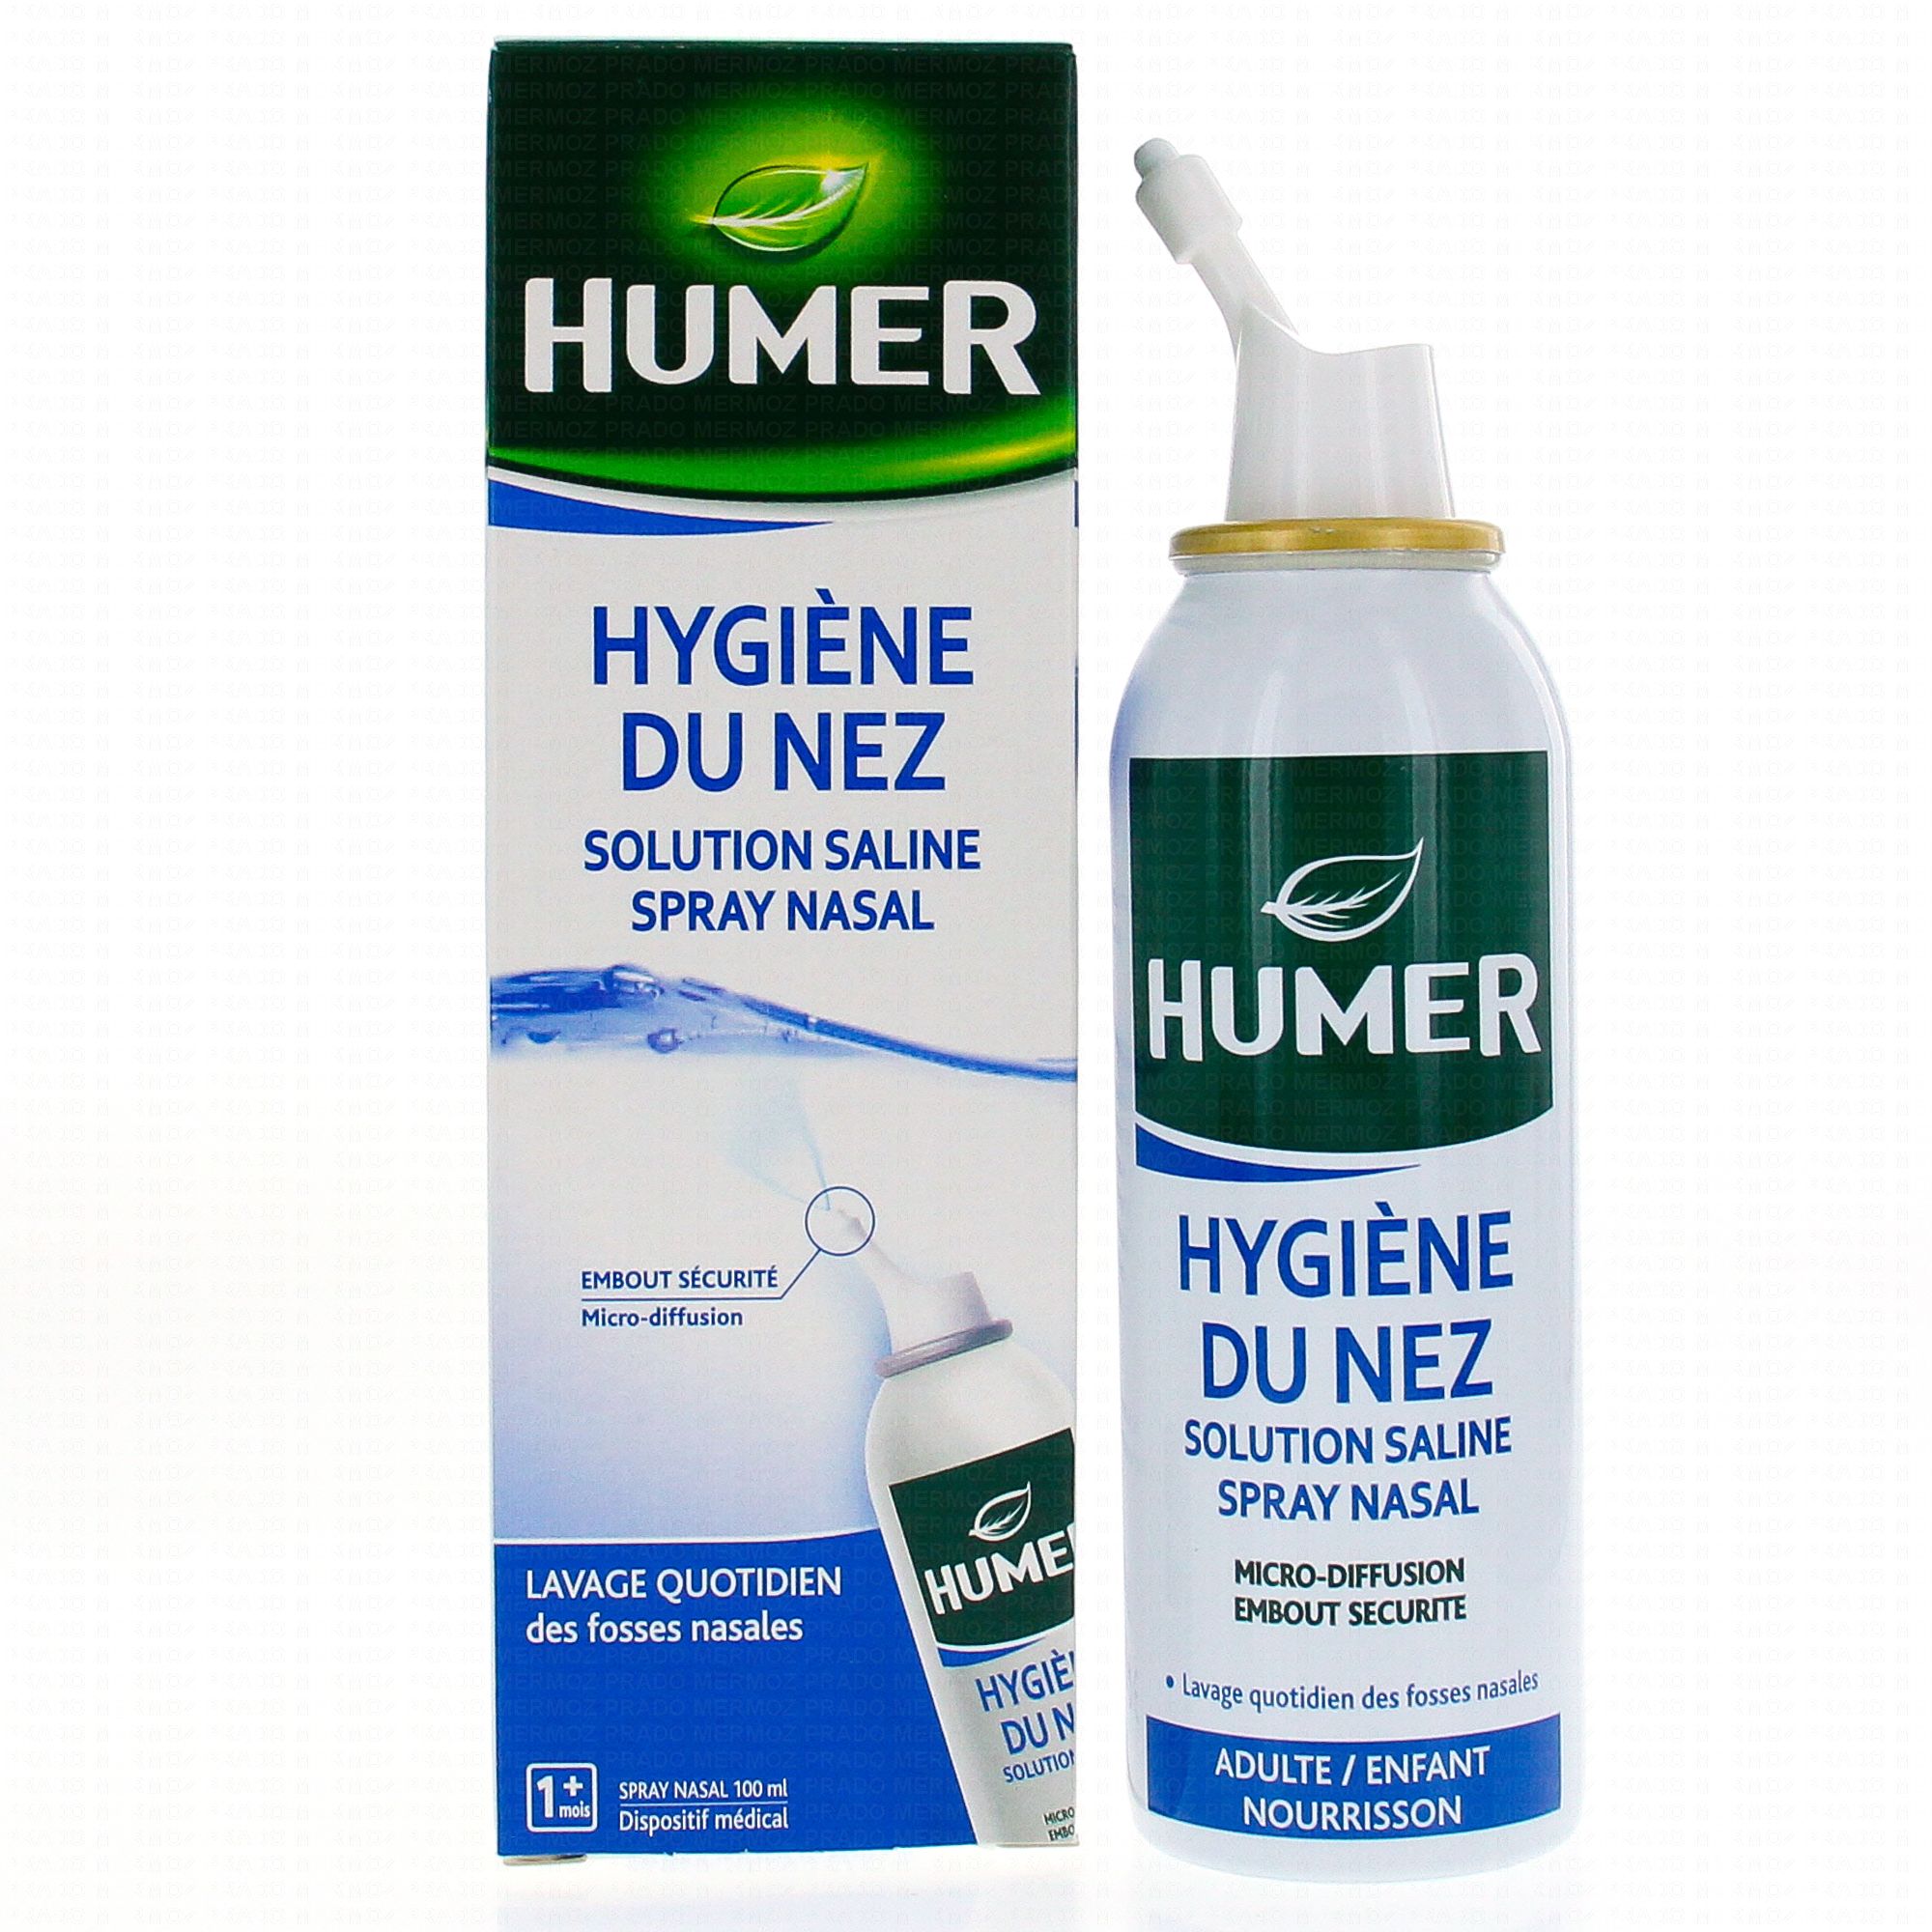 Spray nasal Humer Hygiène du nez : 100% eau de mer pure